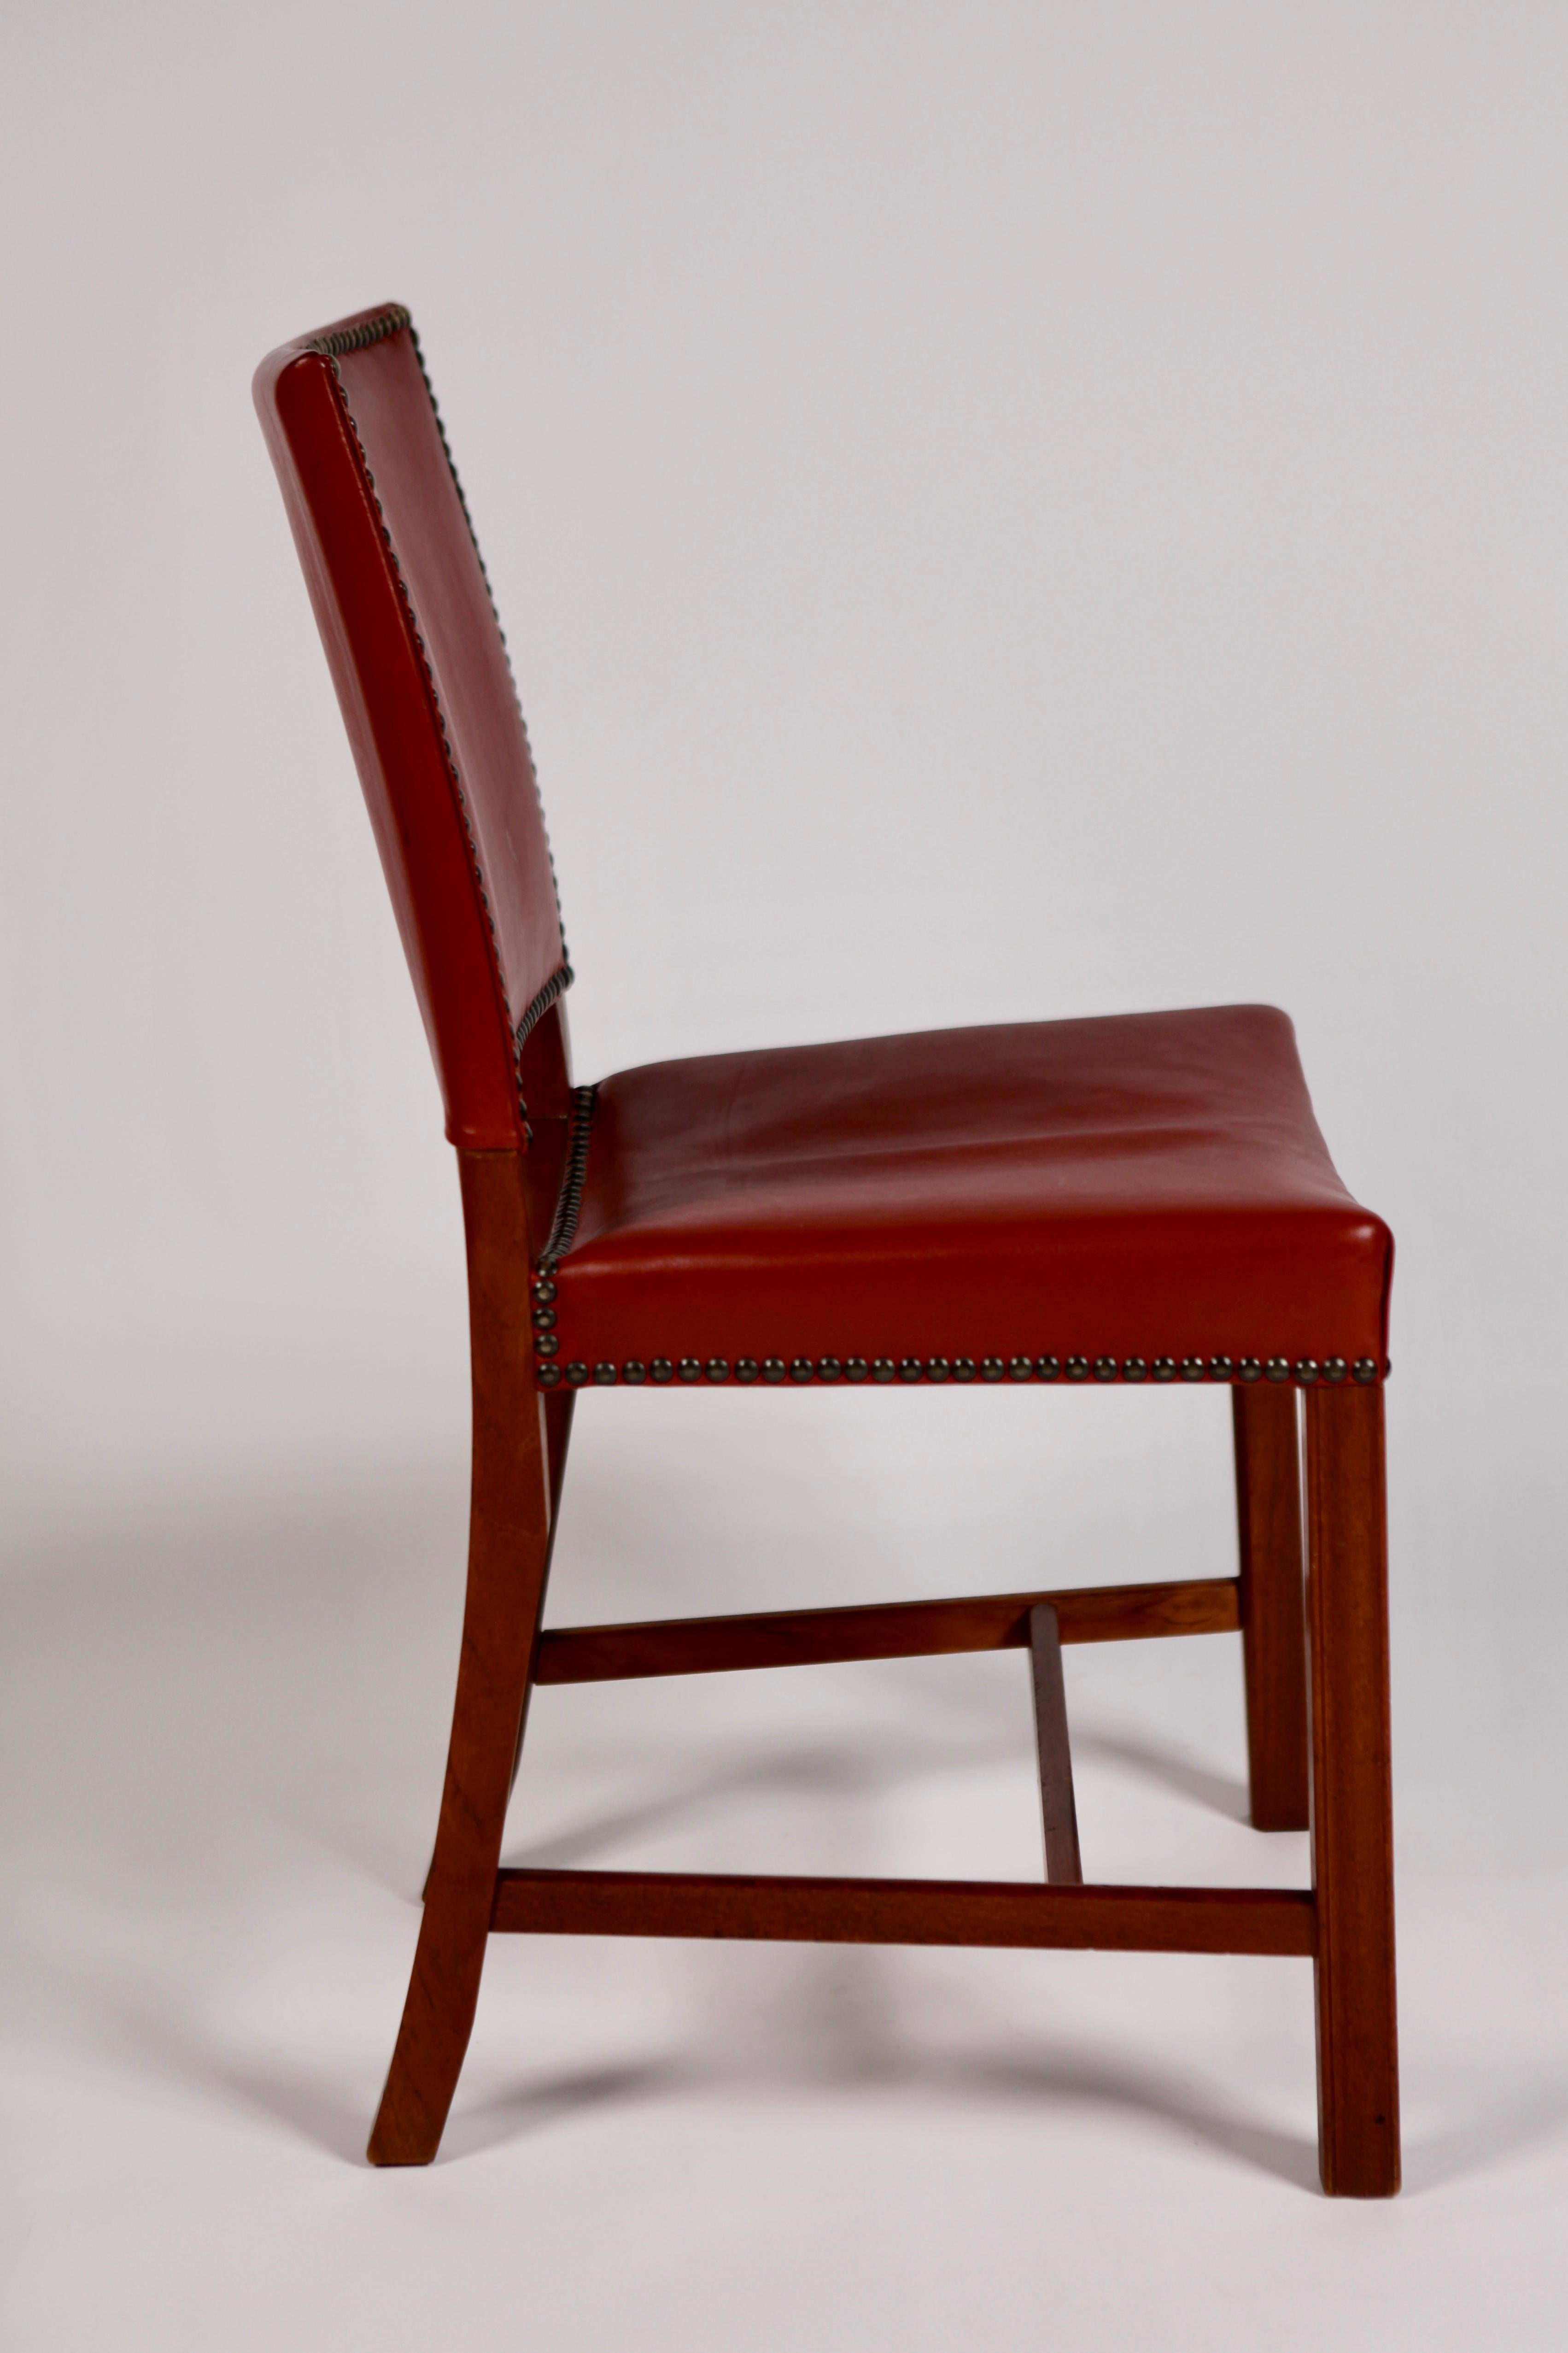 Scandinavian Modern Kaare Klint, Barcelona Chair, Red Leather and Mahogany, Denmark, 1940s